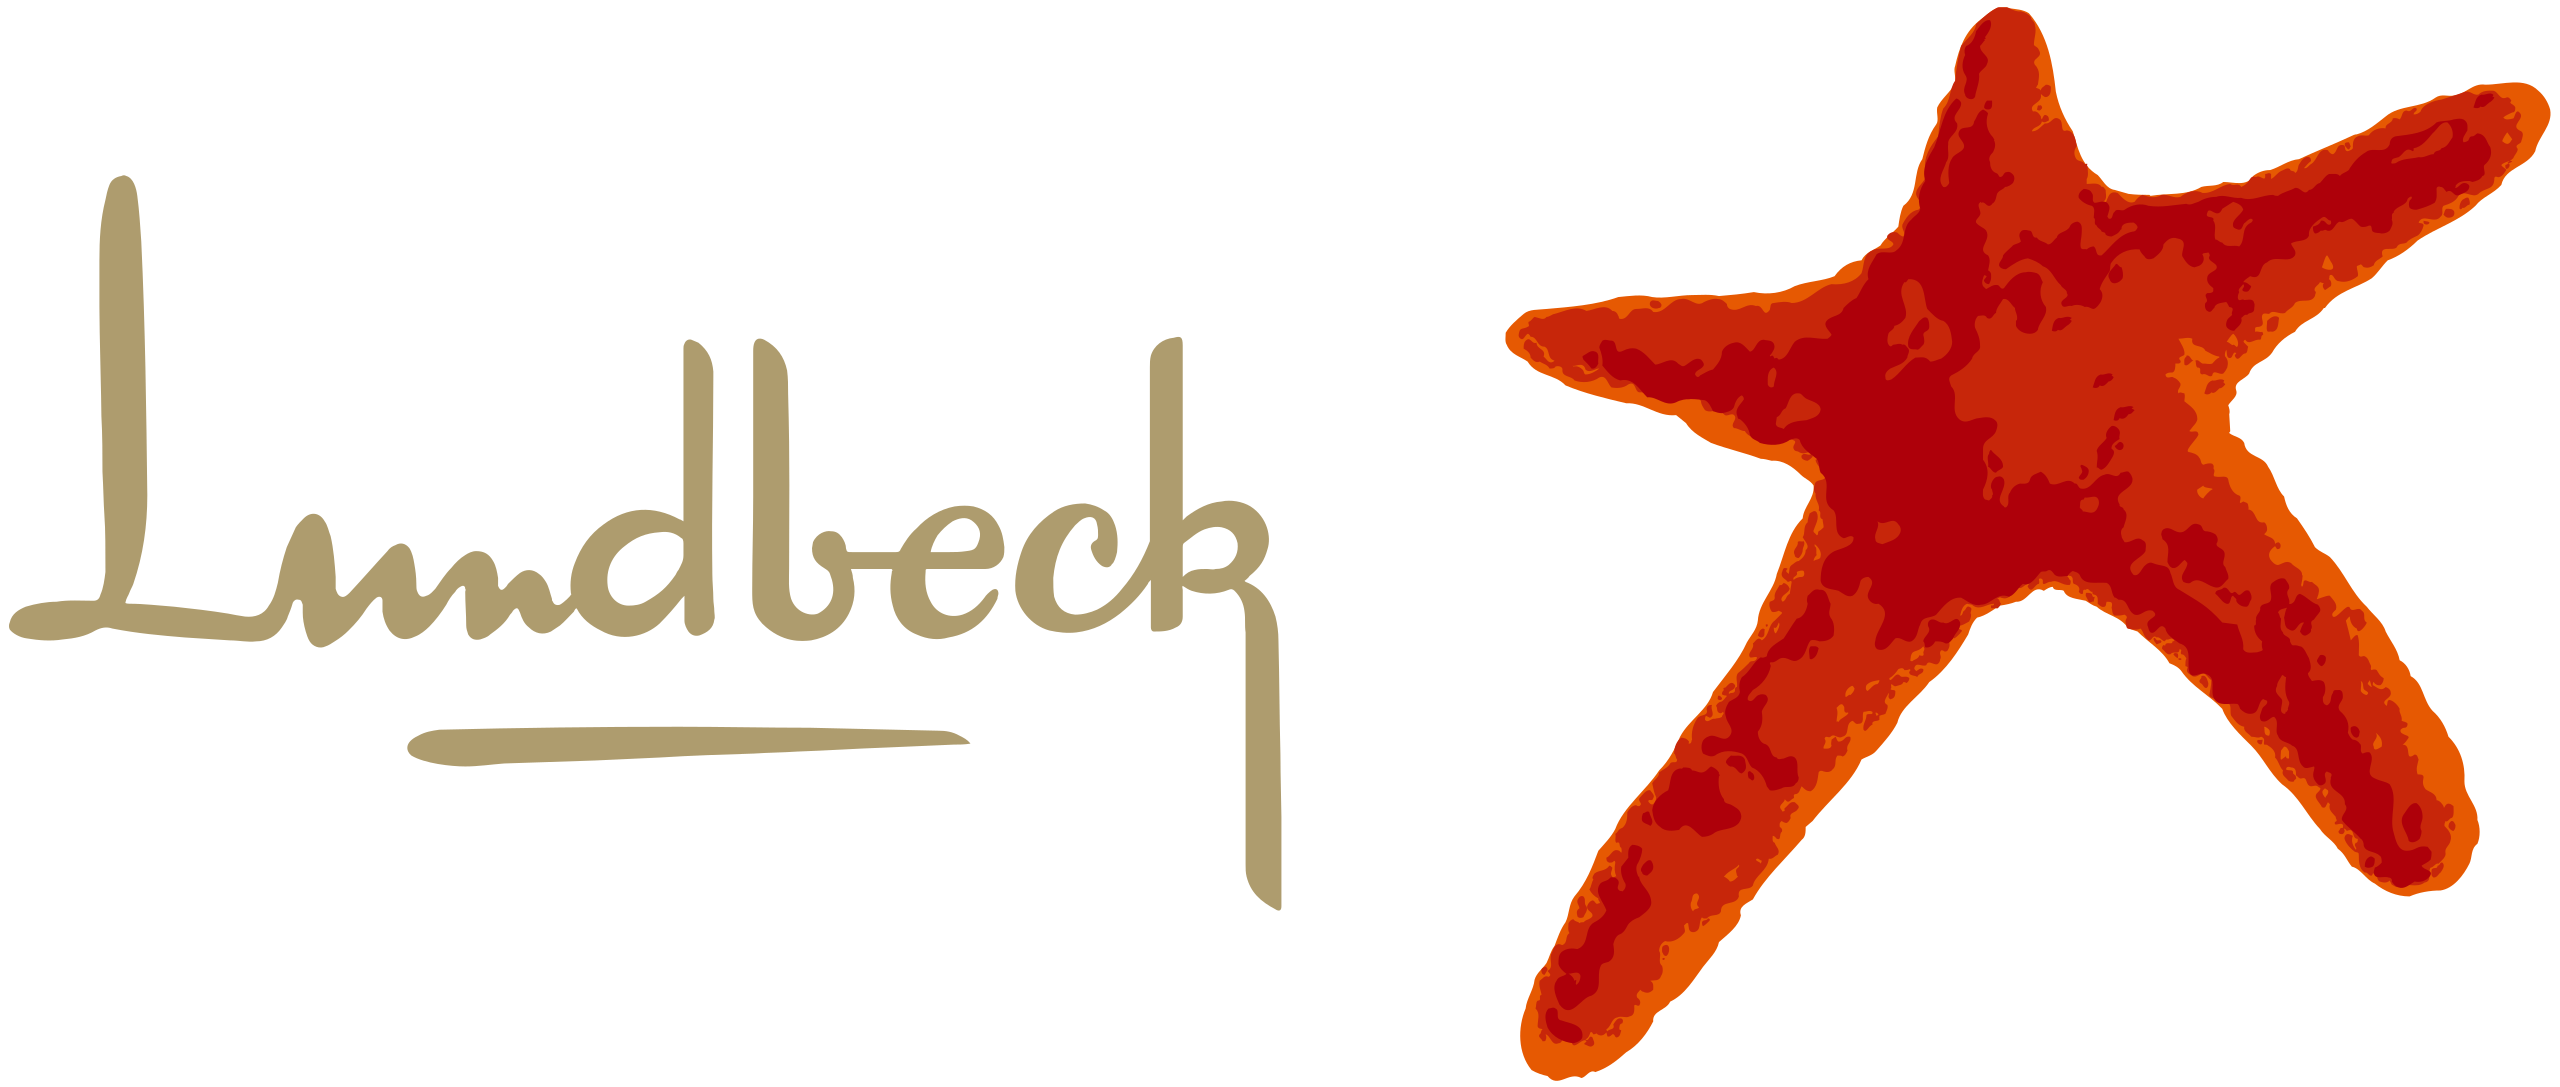 4  Lundbeck logo.svg